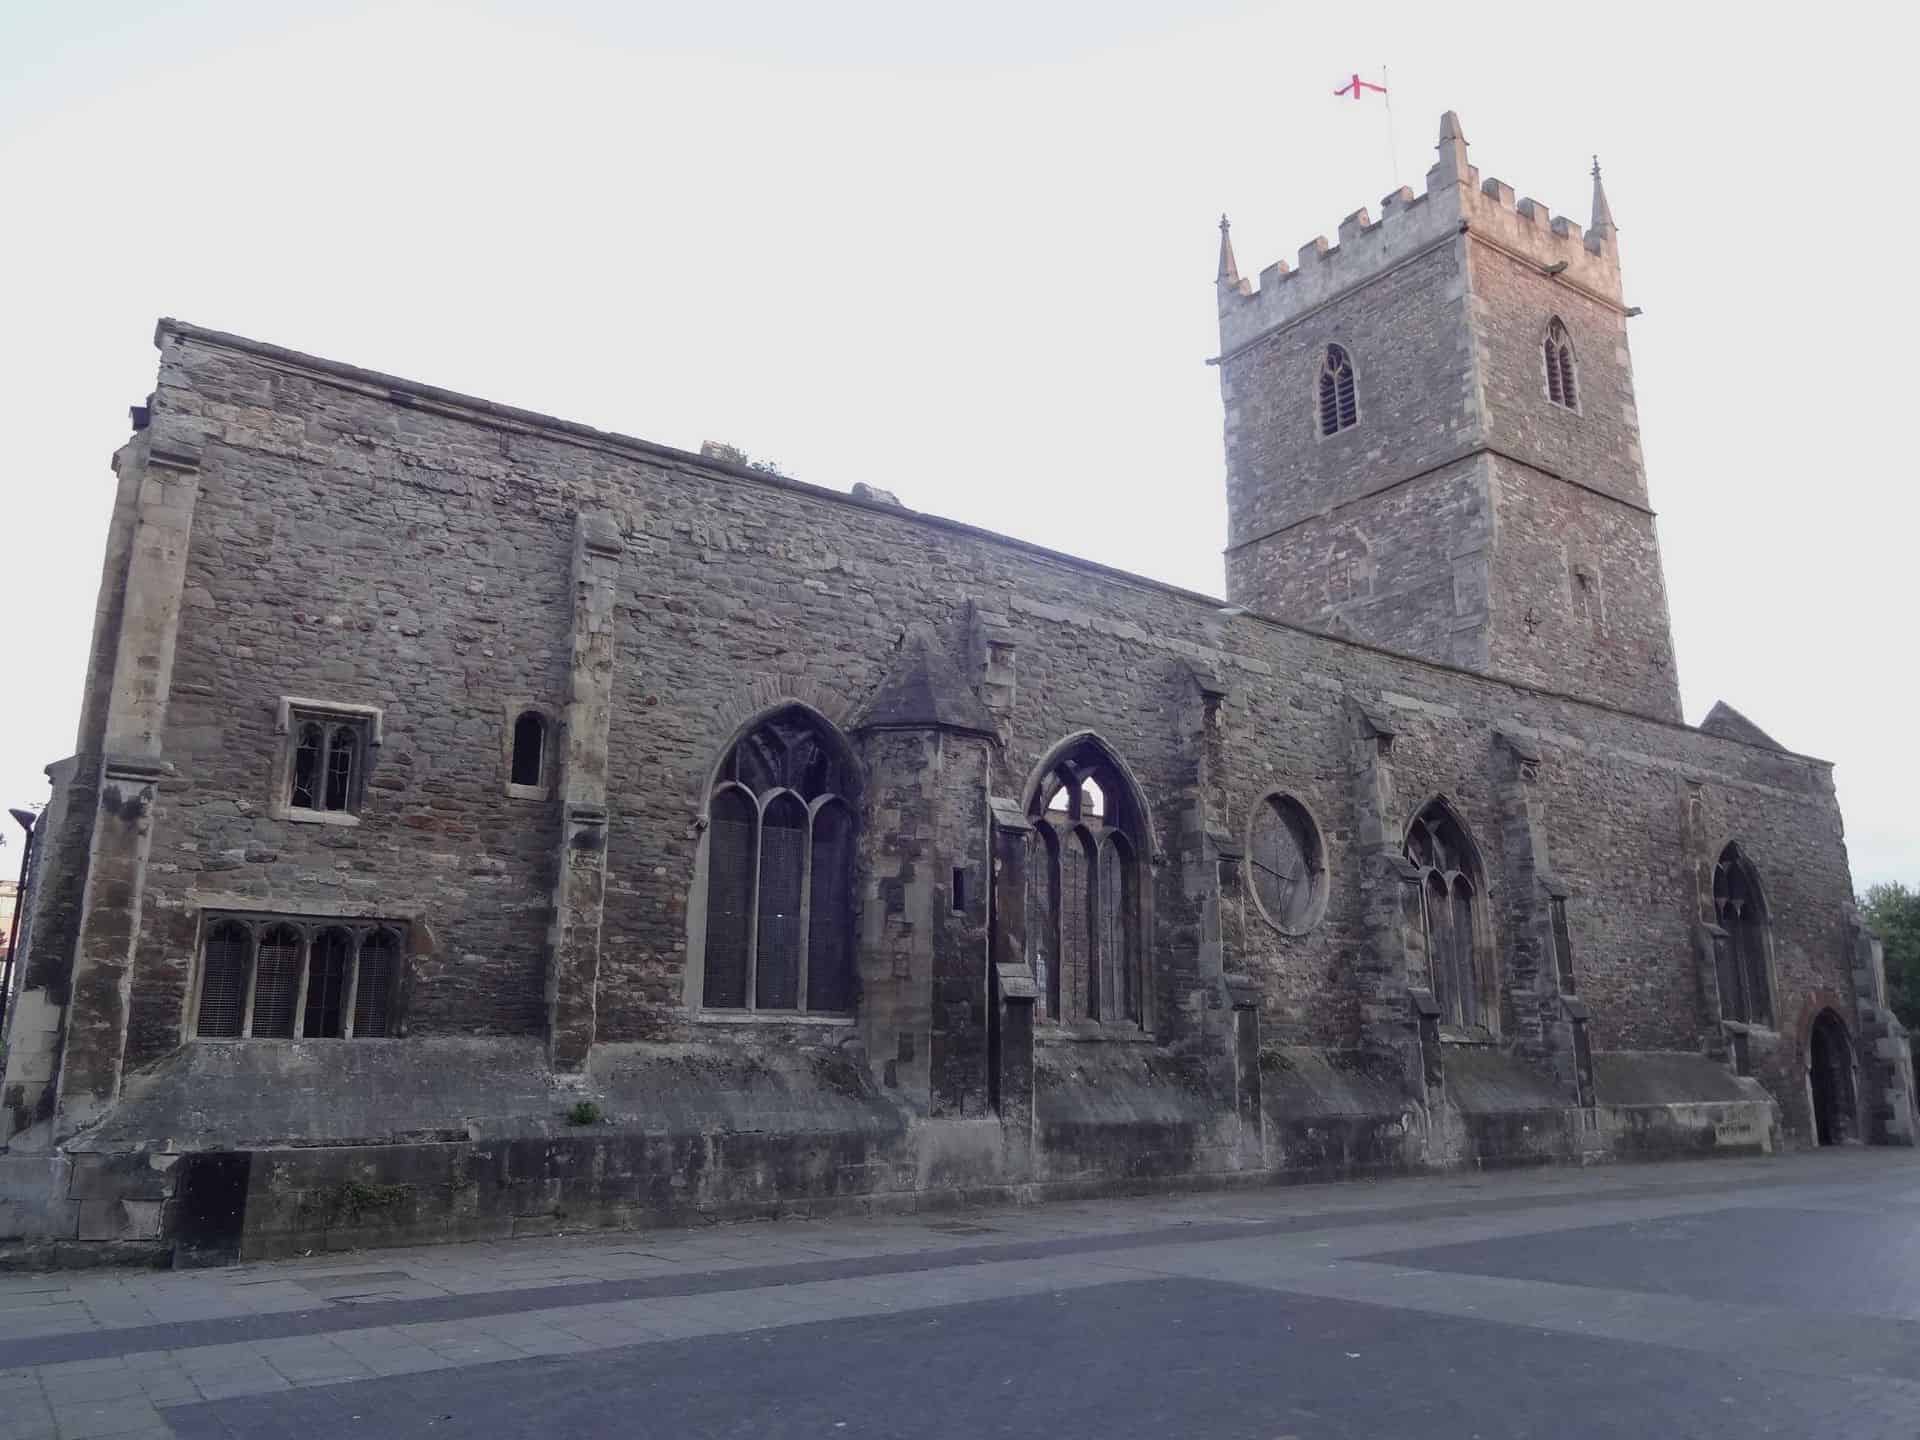 St Peter's Church in UK